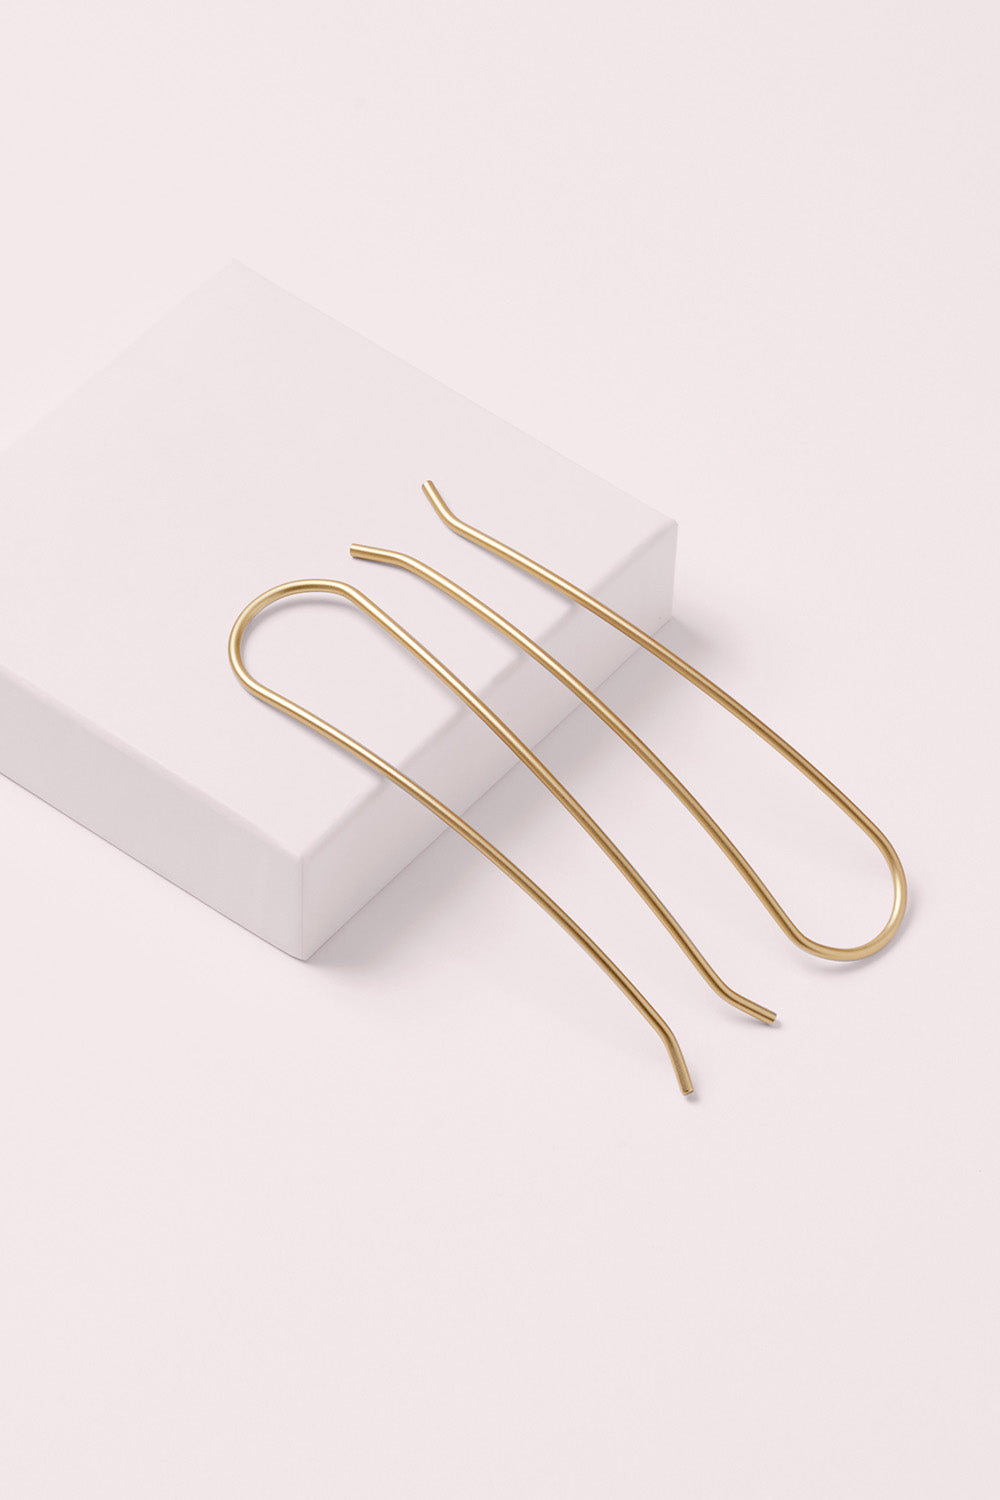 gold slim chignon French hair pin set on a white box 